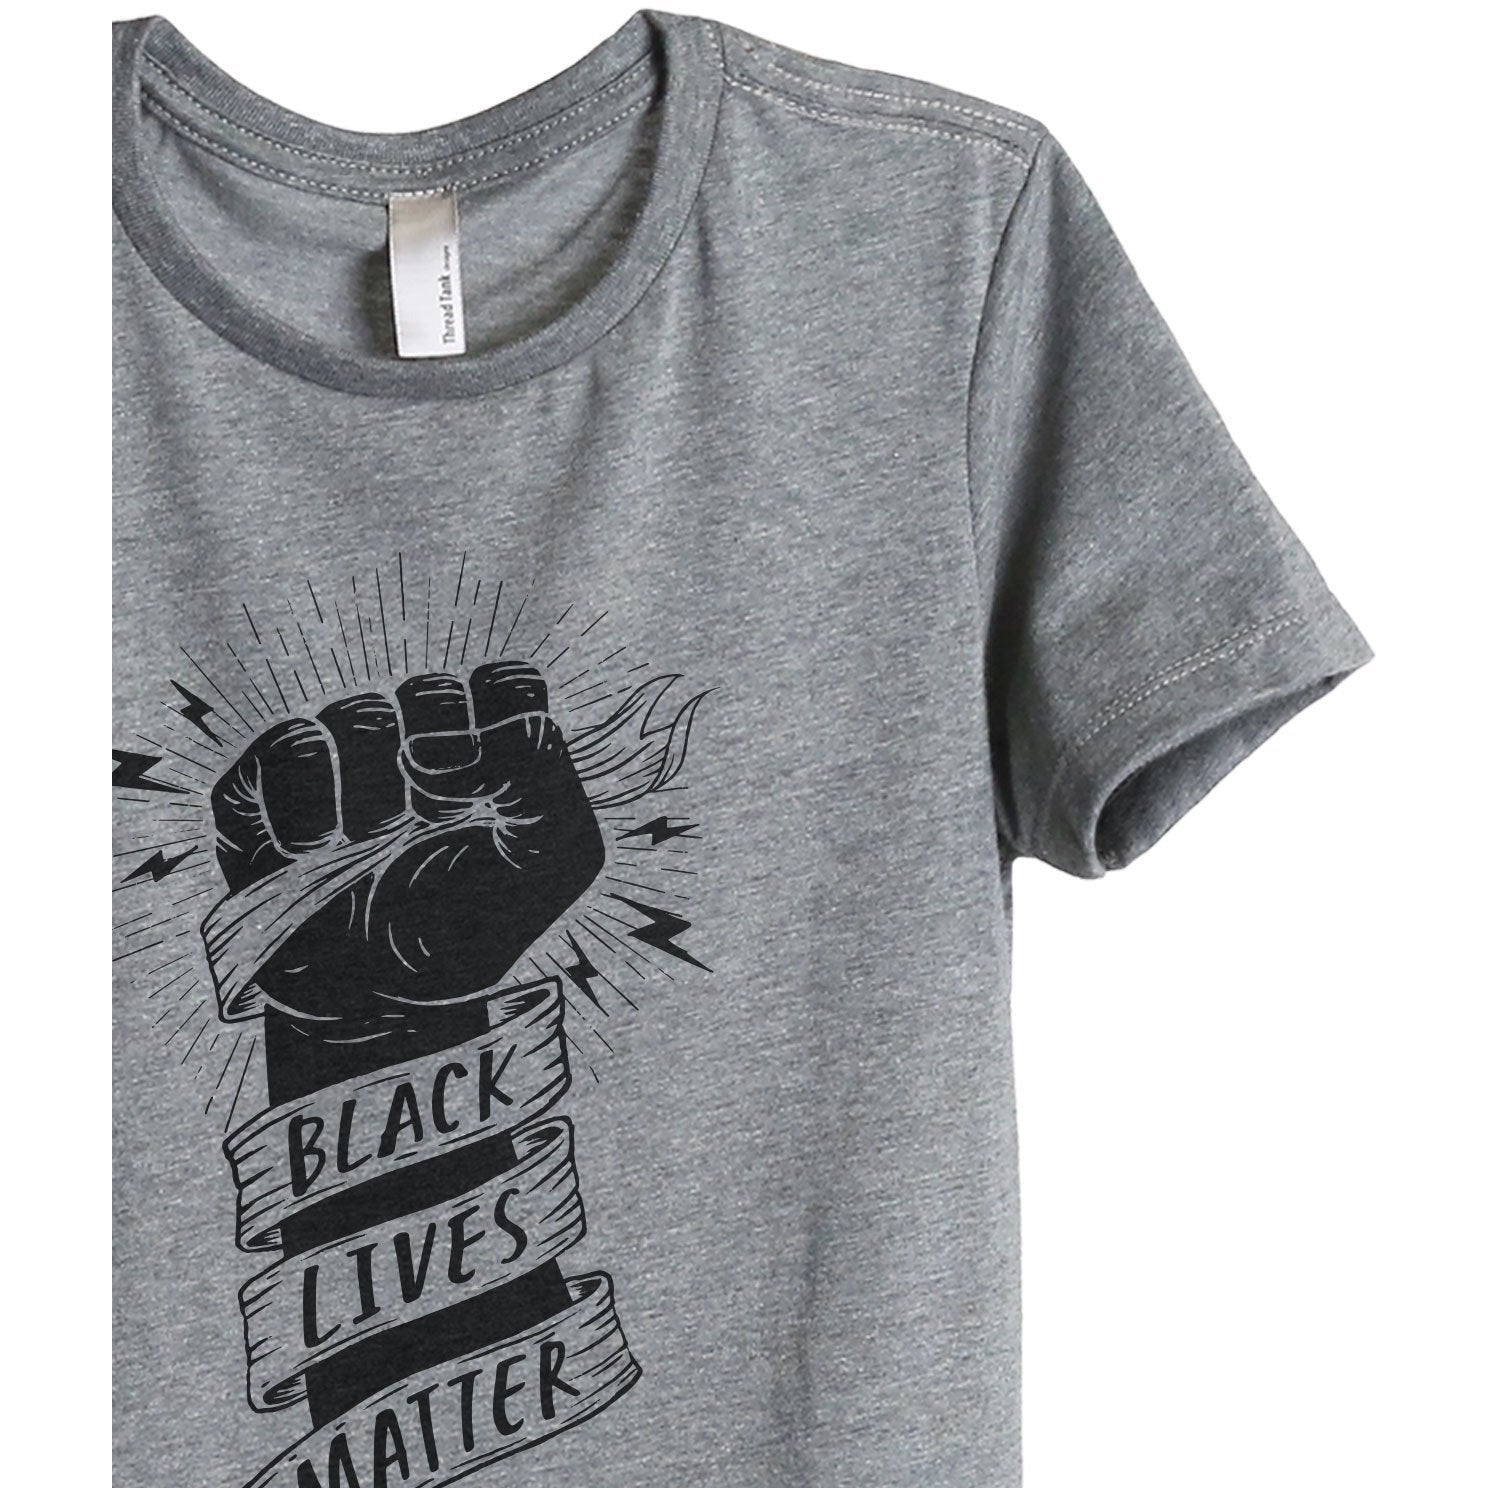 Black Lives Matter Women's Relaxed Crewneck T-Shirt Top Tee Heather Grey Zoom Details
